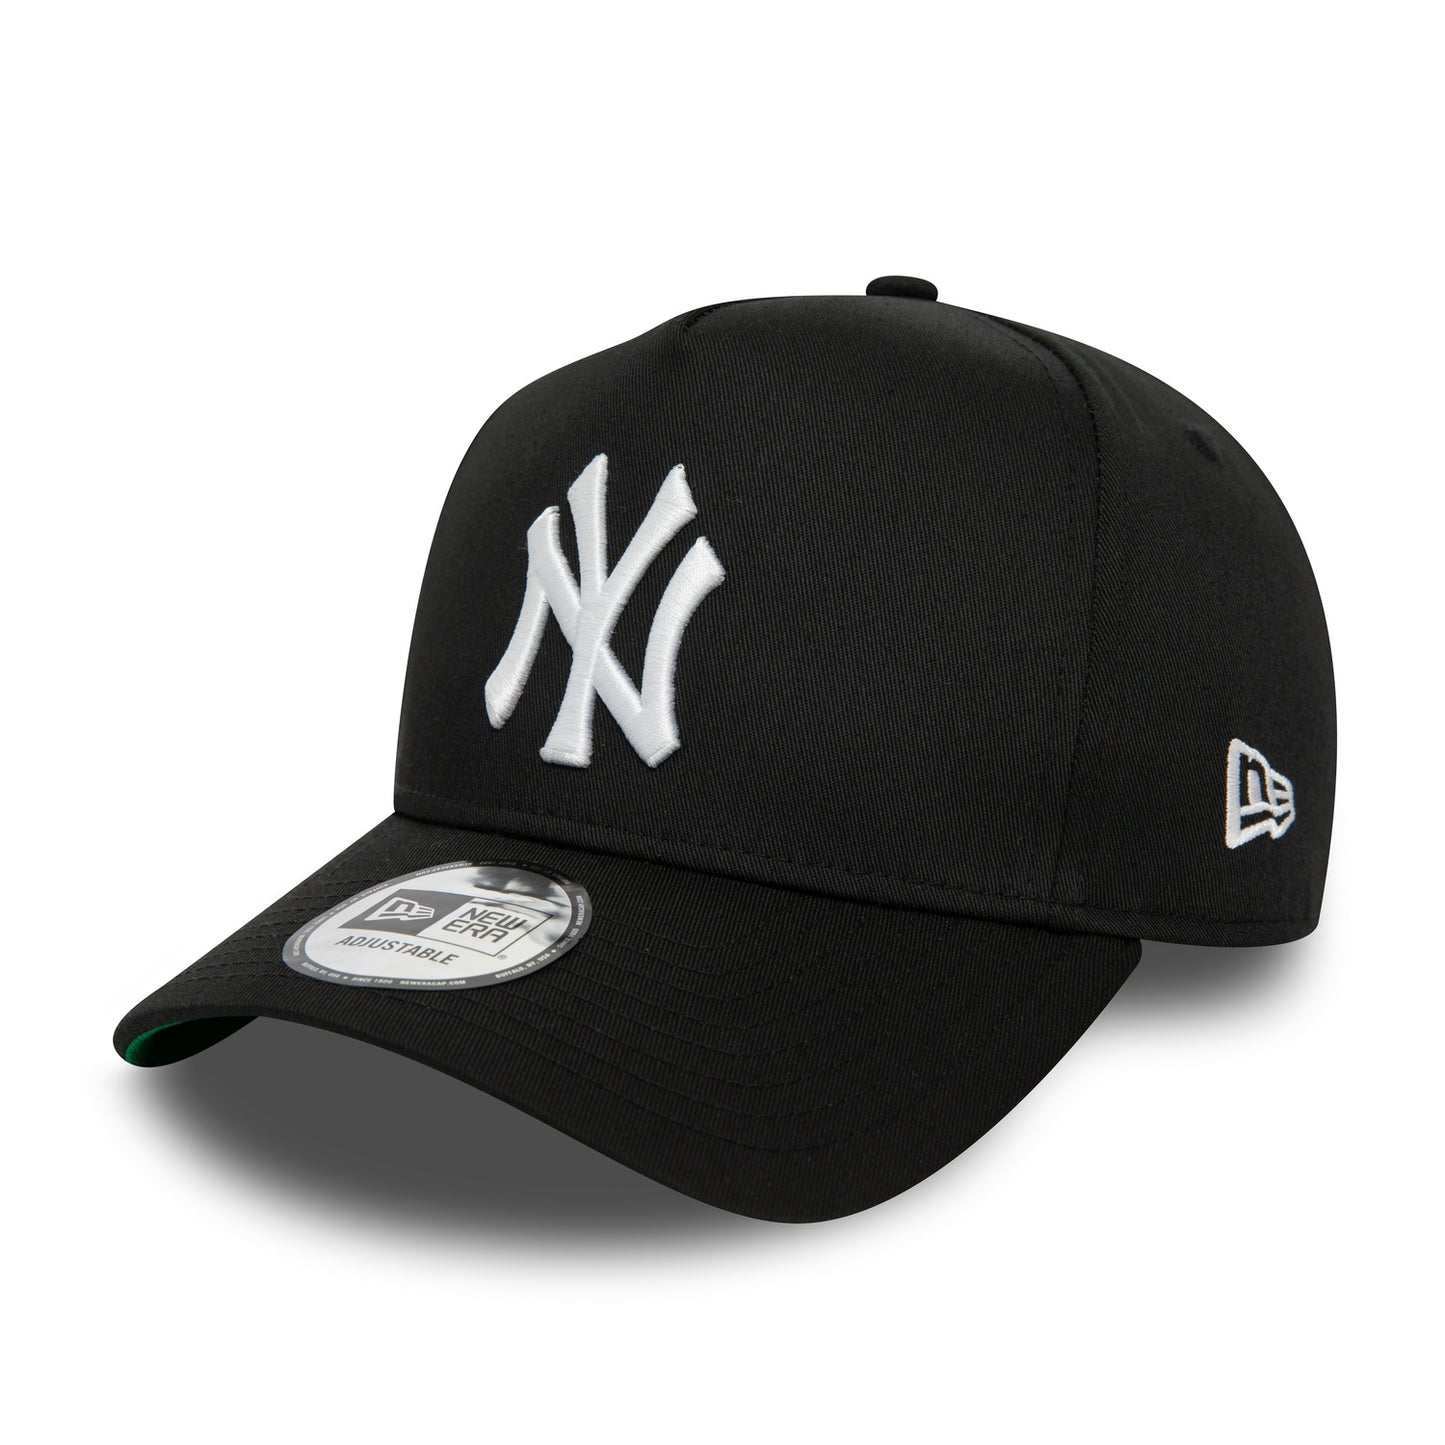 NEW ERA 9FORTY A-FRAME MLB NEW YORK YANKEES WORLD SERIES 1999 BLACK / KELLY GREEN UV SNAPBACK CAP